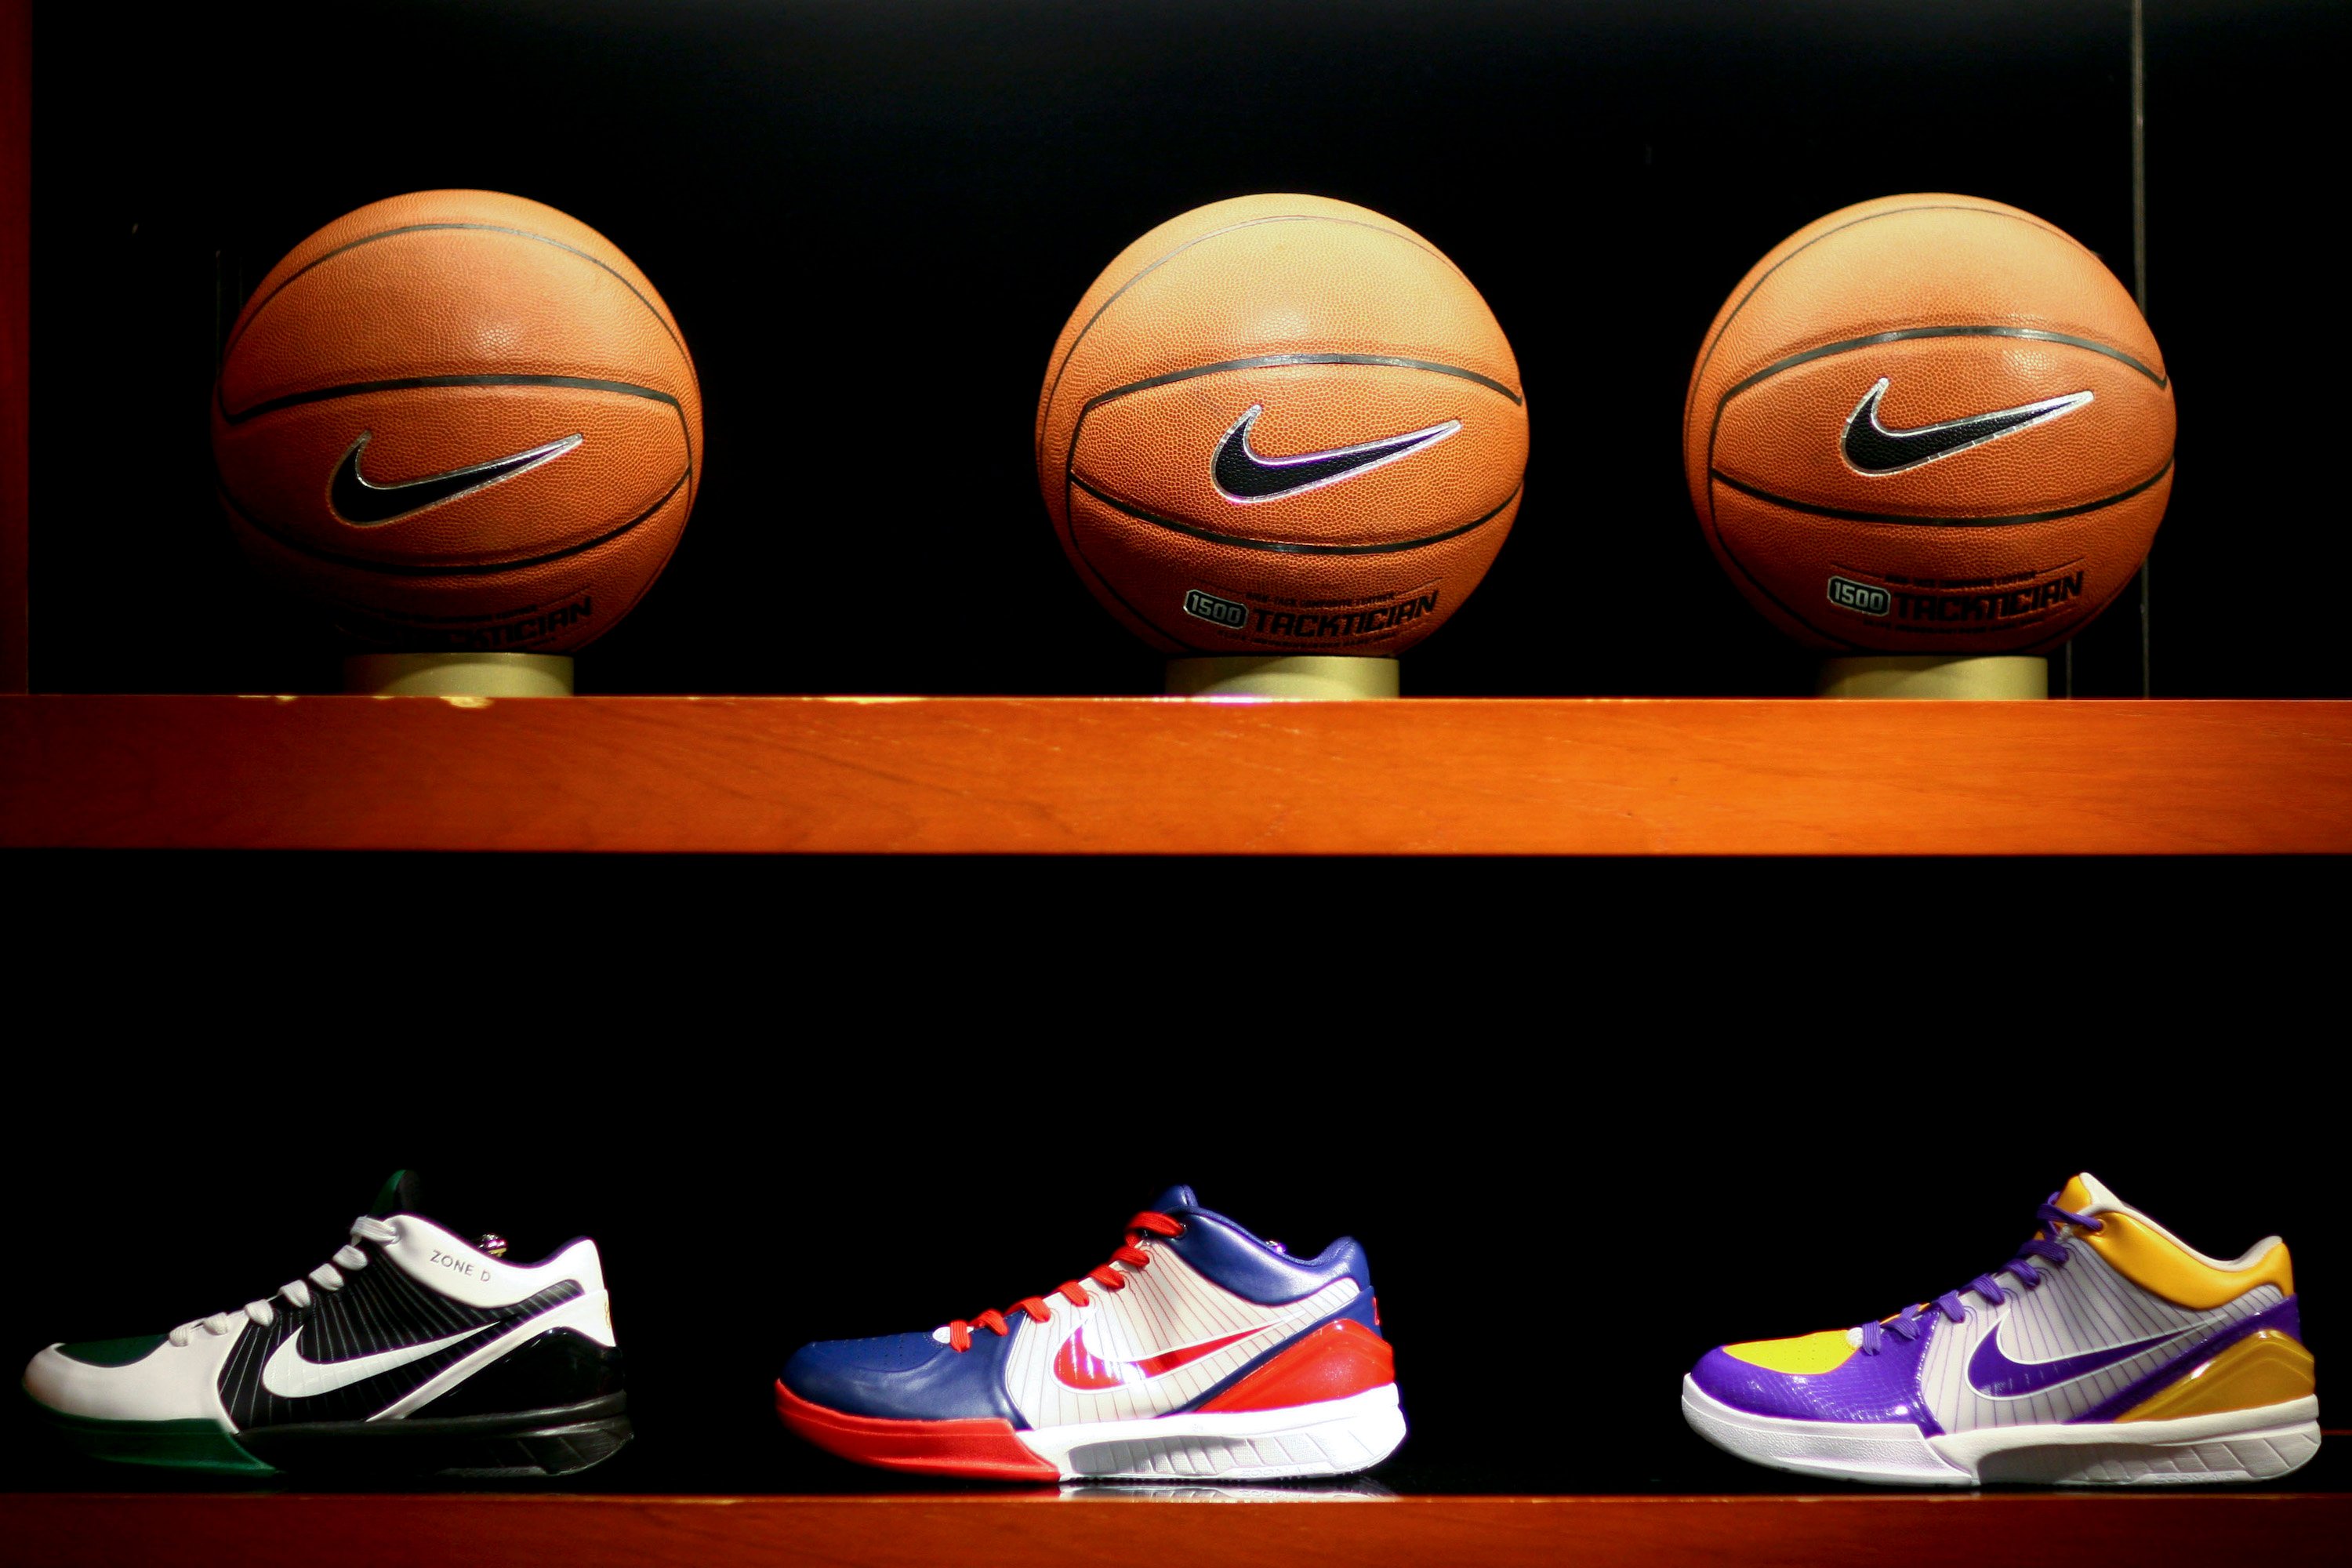 Kobe Bryant's Nike shoe line is displayed at Niketown in New York on June 24, 2009